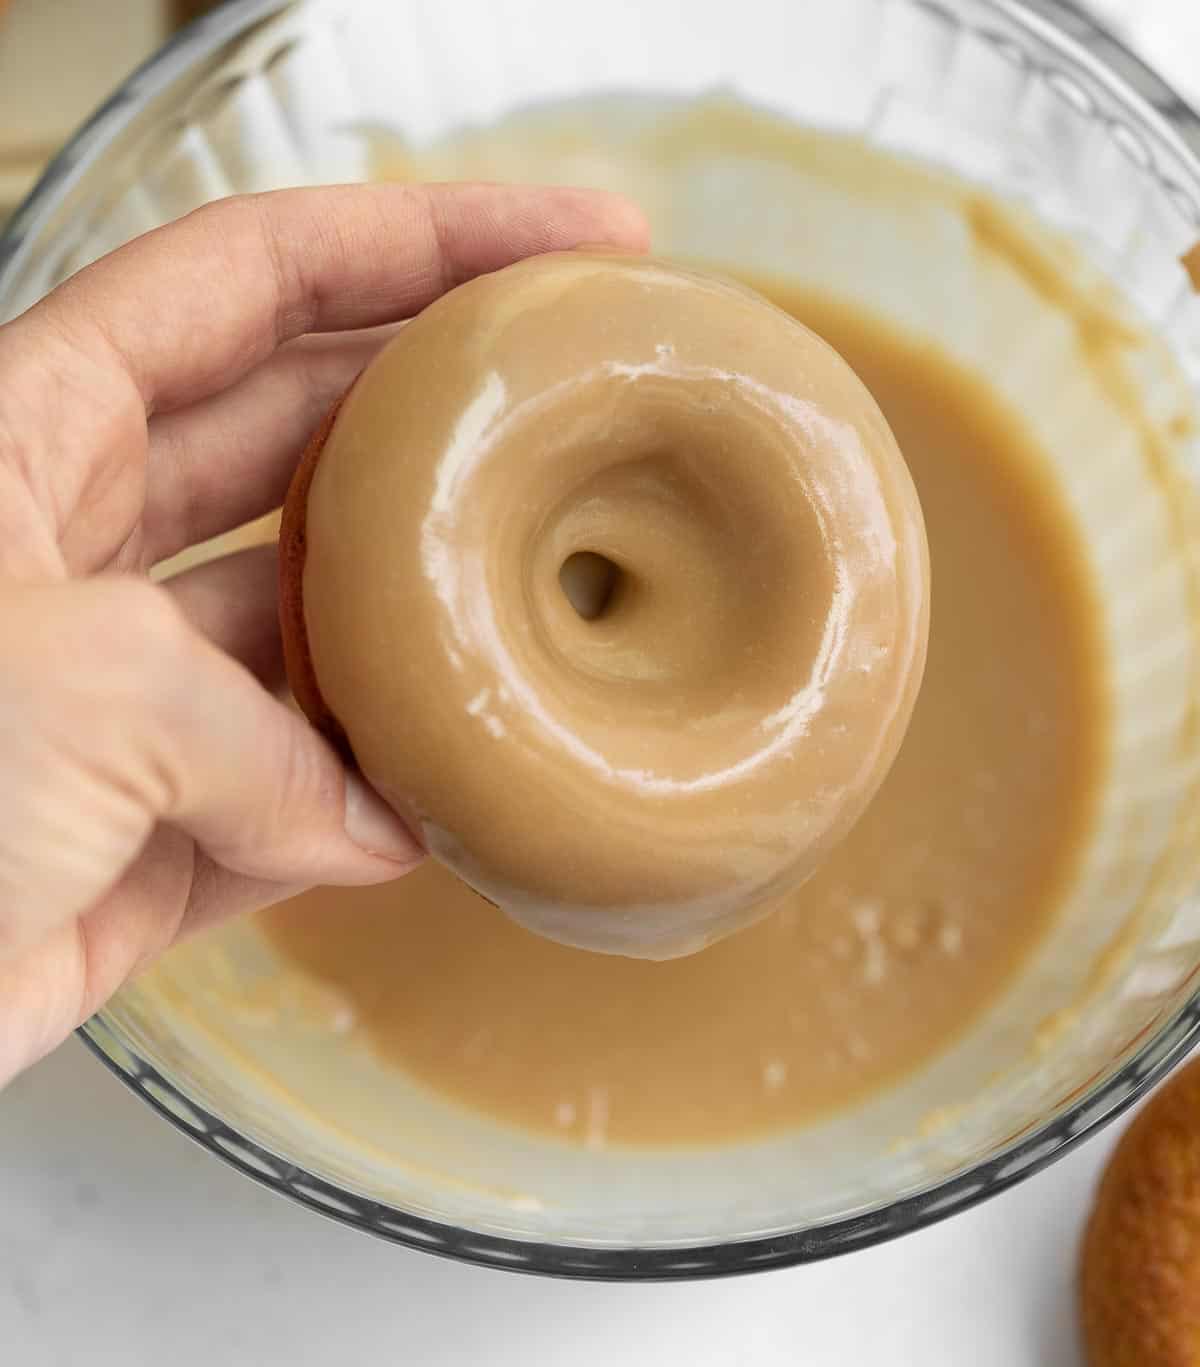 gluten free donut being dipped in glaze